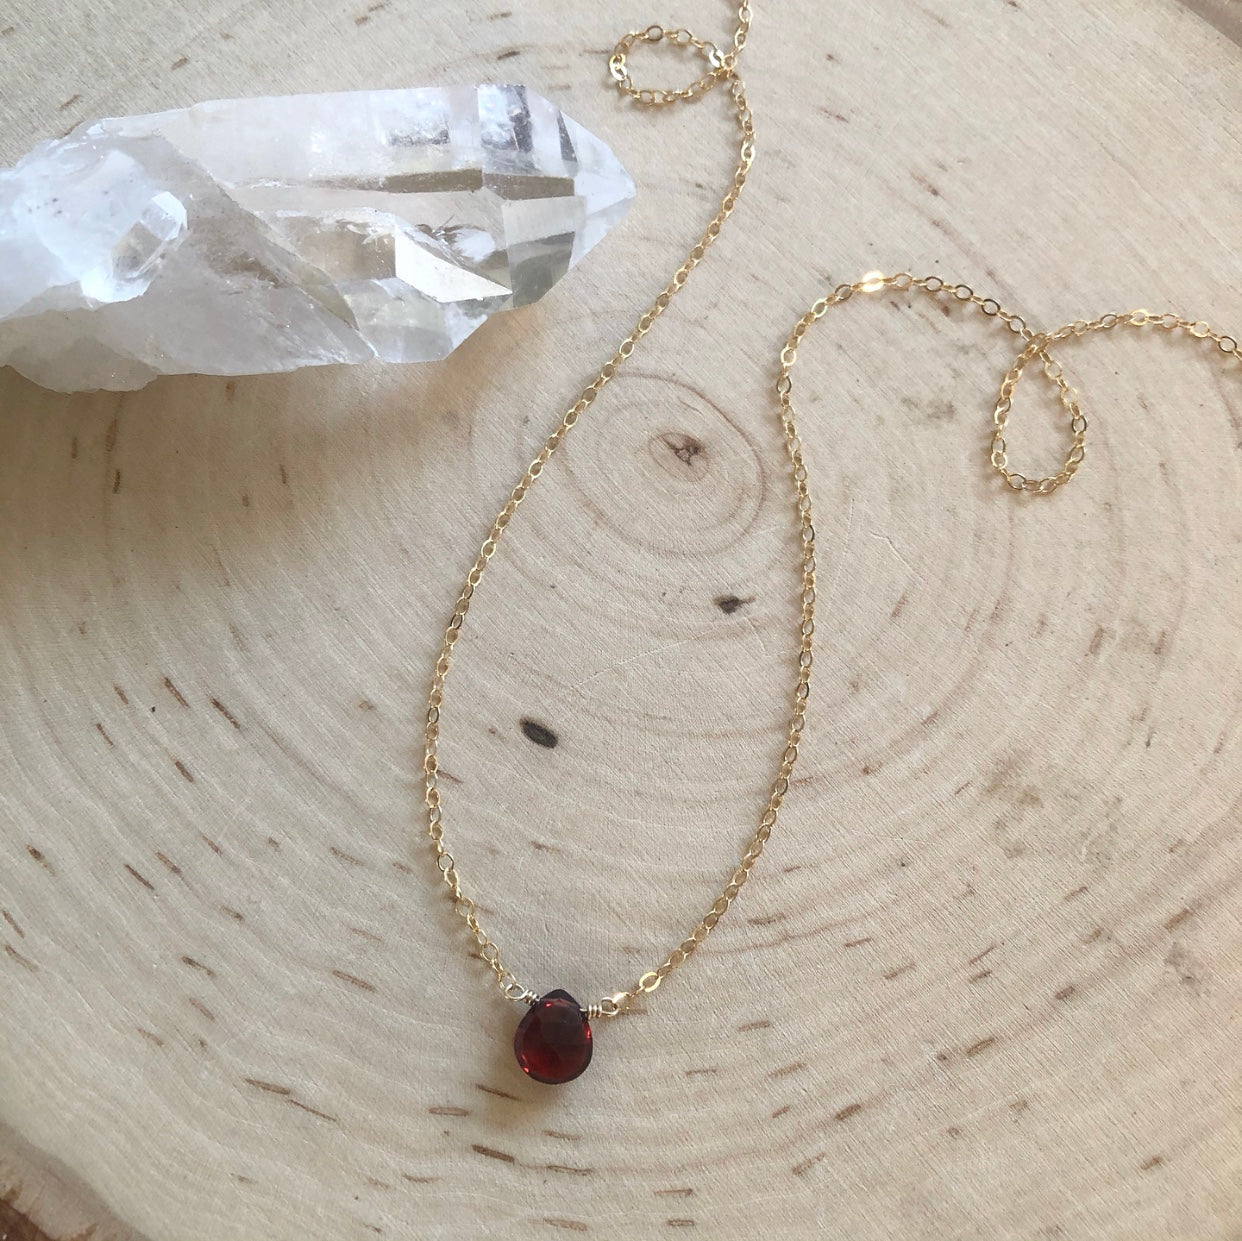 Mini Garnet pendant necklace